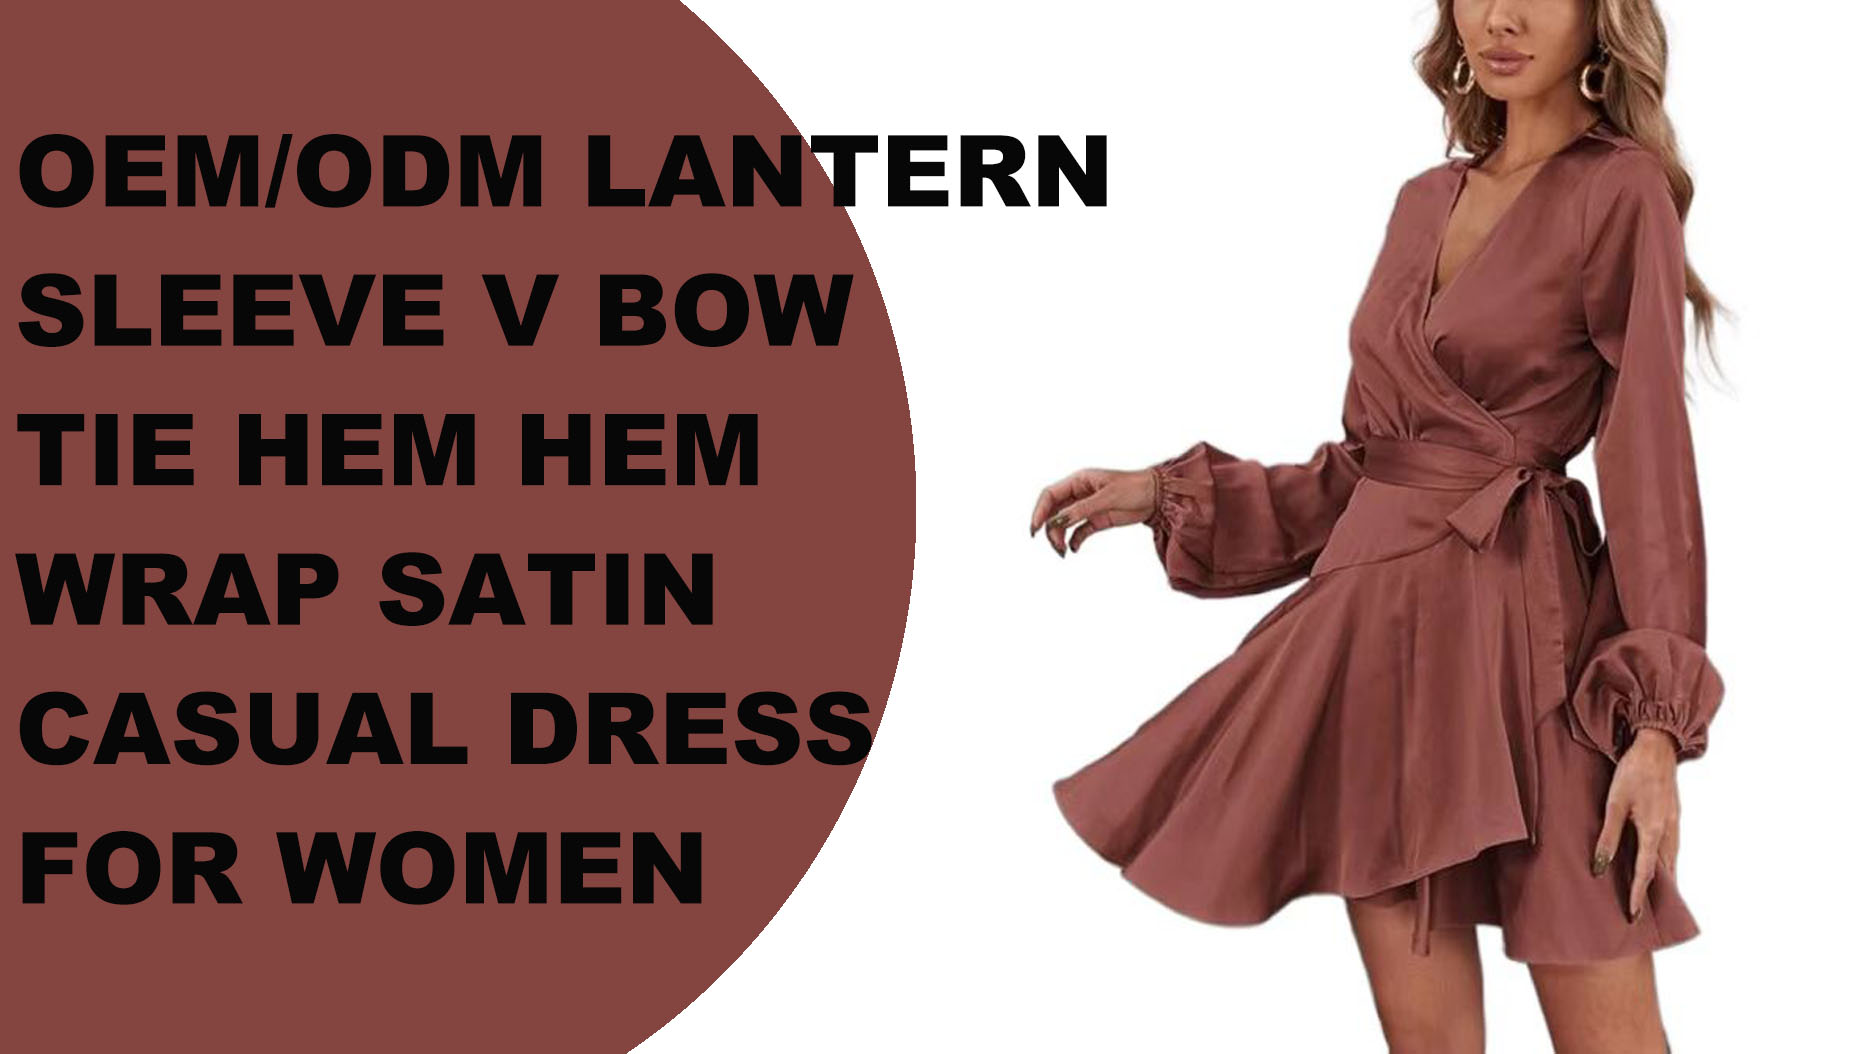 Lantern Sleeve Bow Satin Casual Dress Կանանց համար